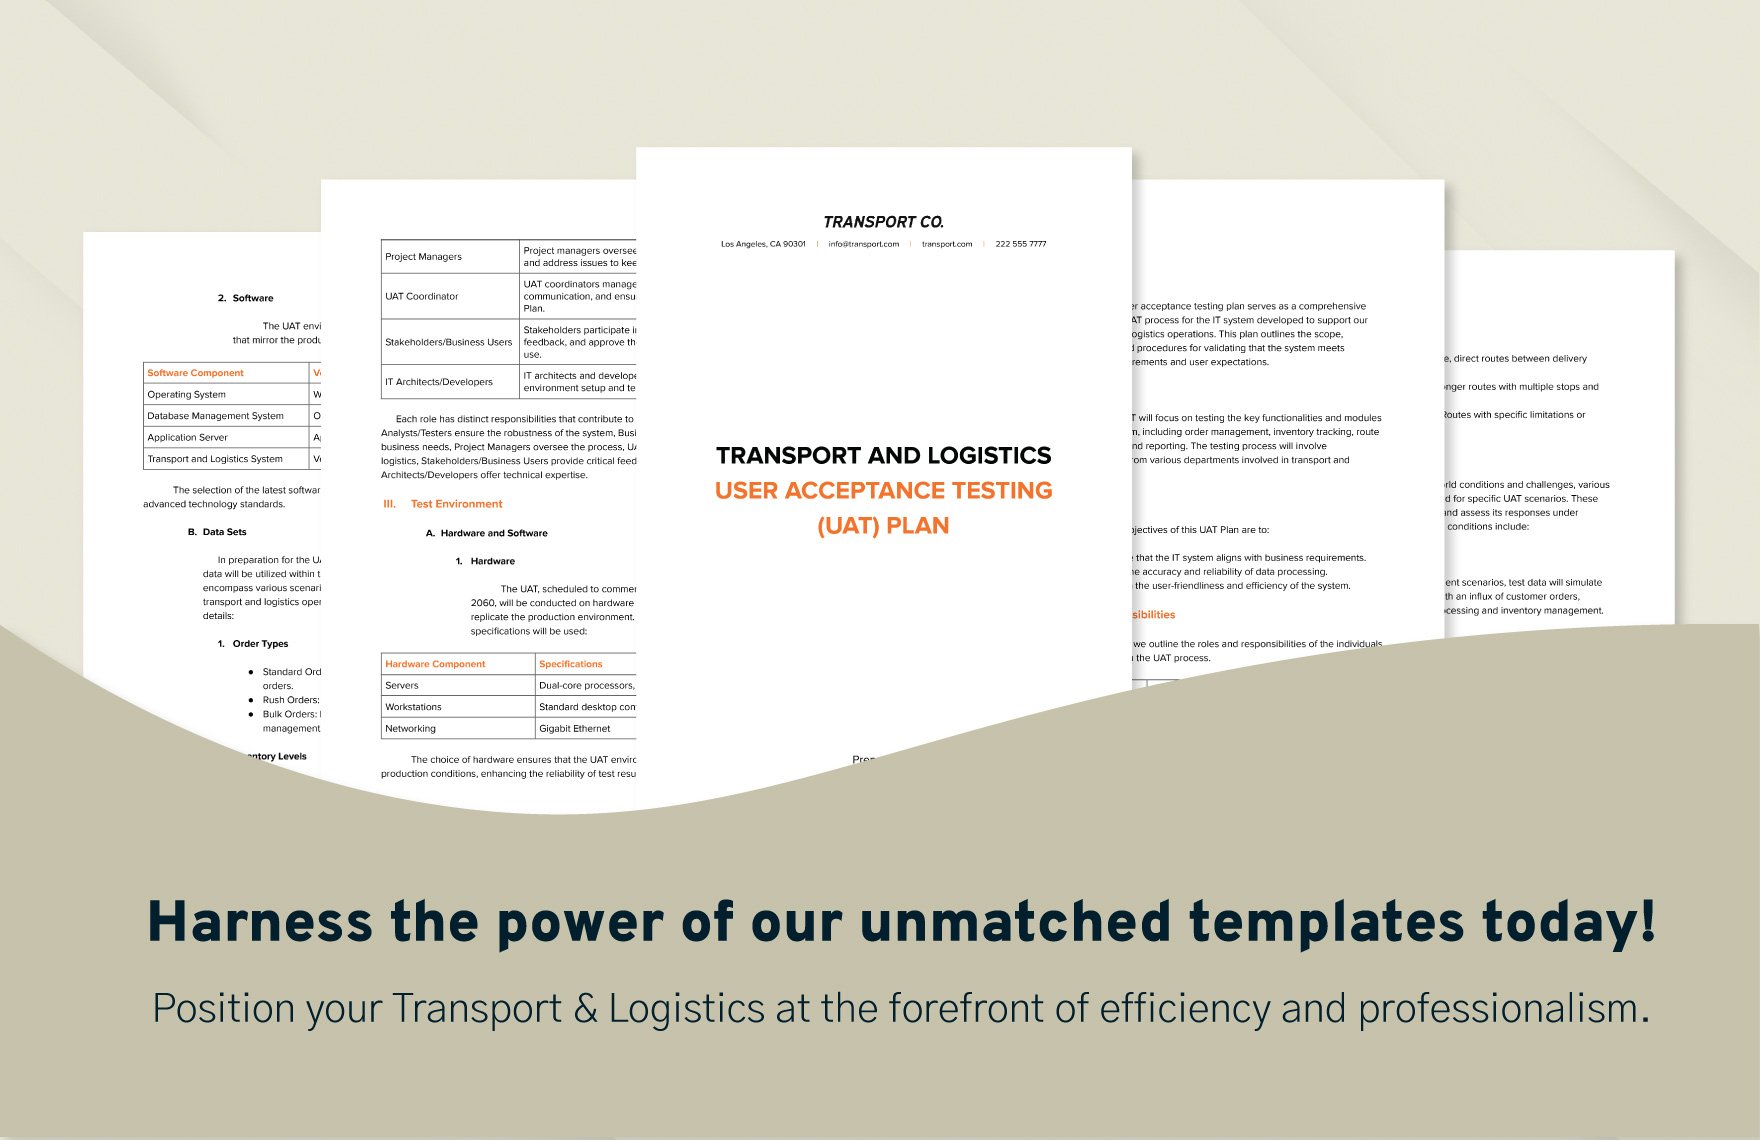 Transport and Logistics User Acceptance Testing (UAT) Plan Template